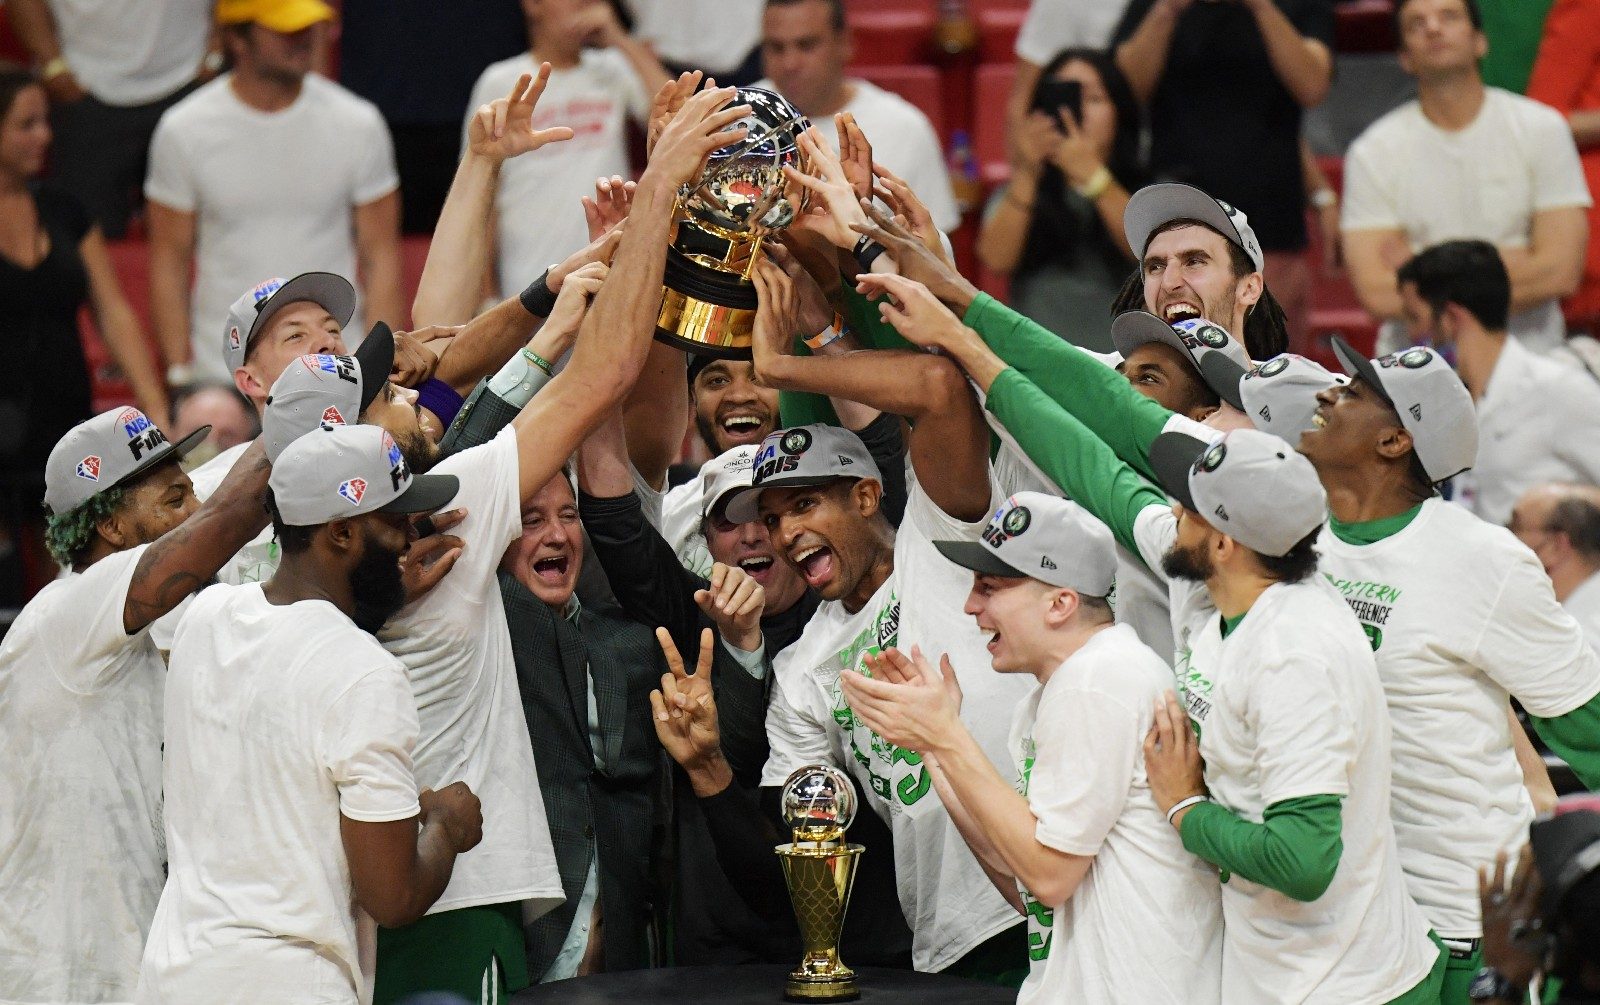 Jayson Tatum, Celtics hold off Heat in Game 7, win East title